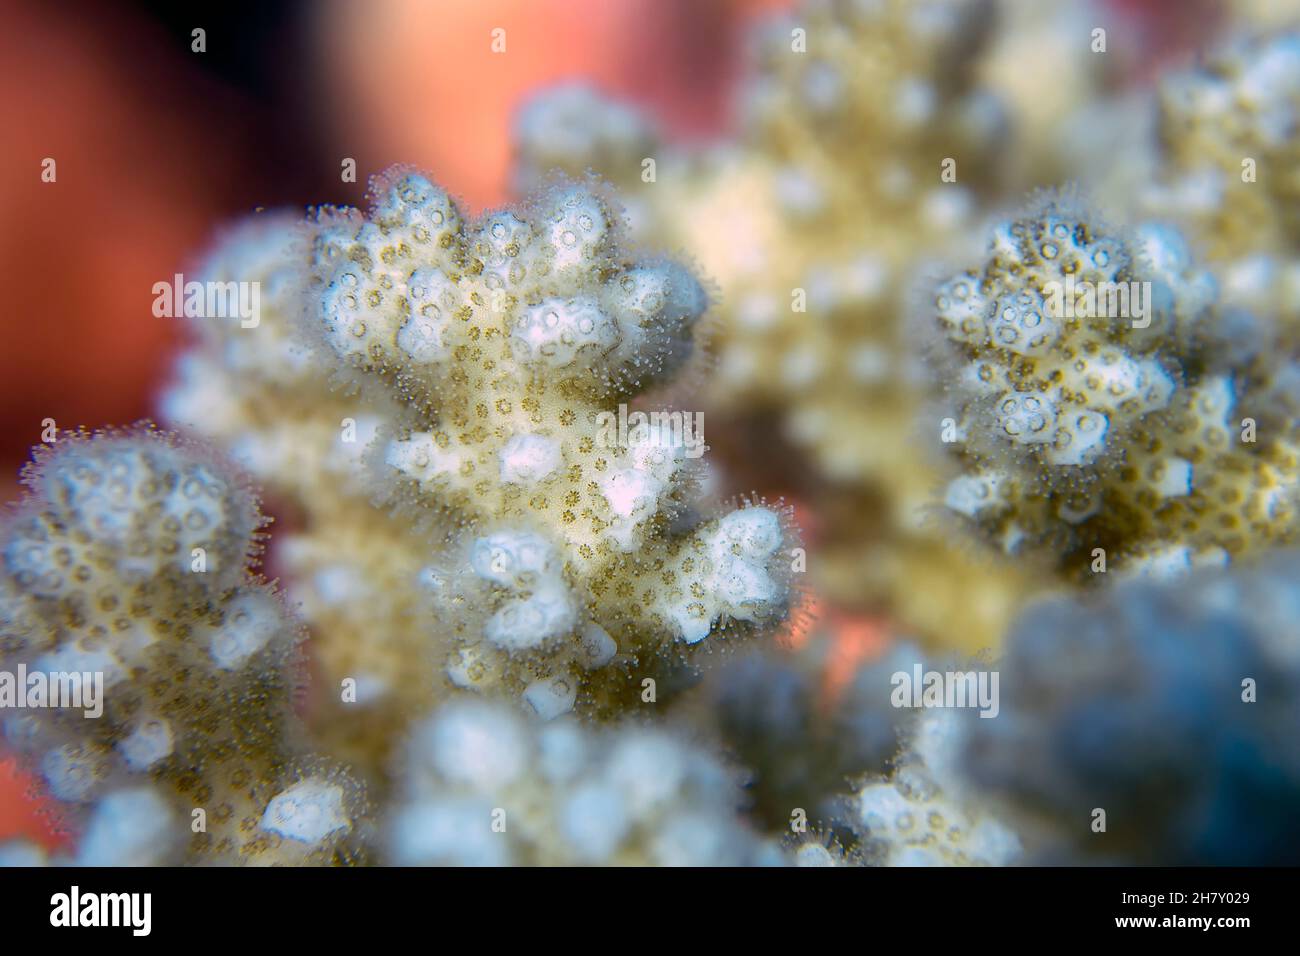 Echinopora irregularis hard coral in the Red Sea, Egypt Stock Photo